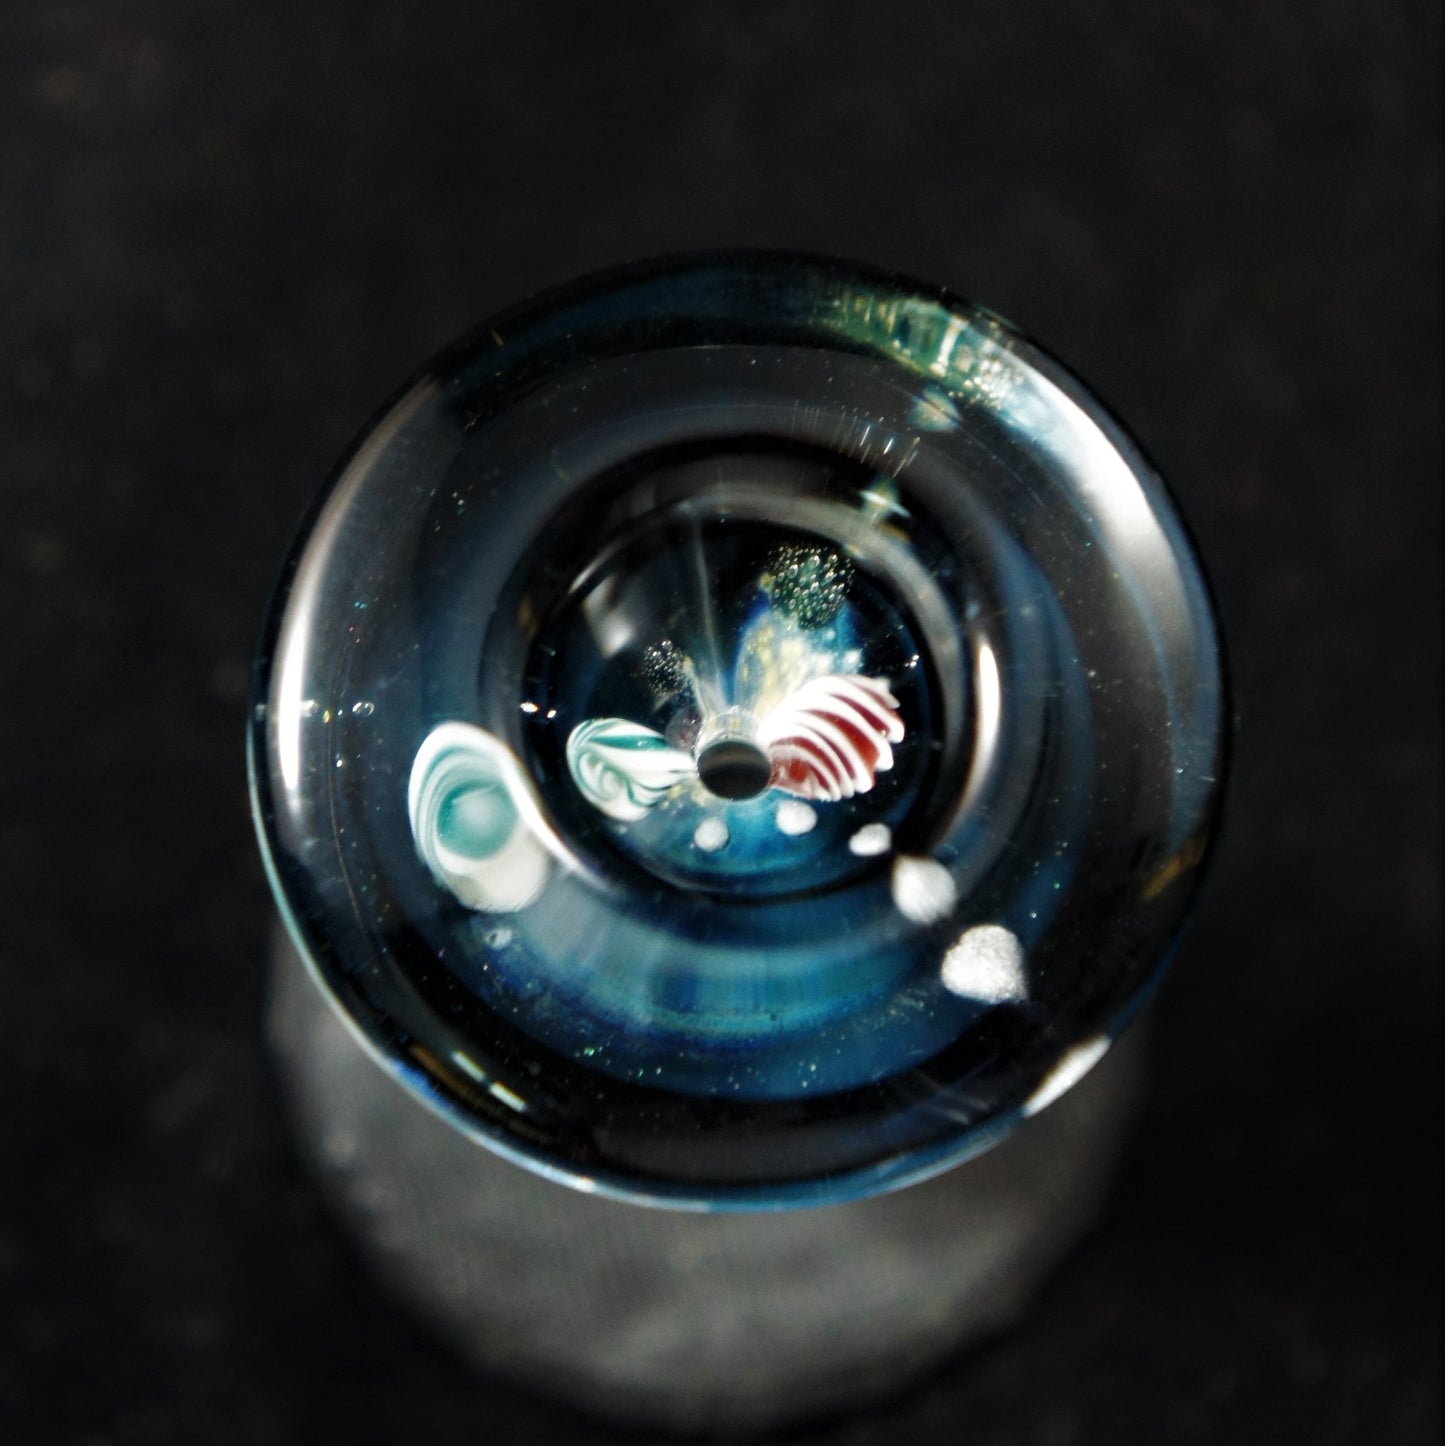 Niko Bh Glass - Diapositive Galaxy Gremlin Colab 14 mm